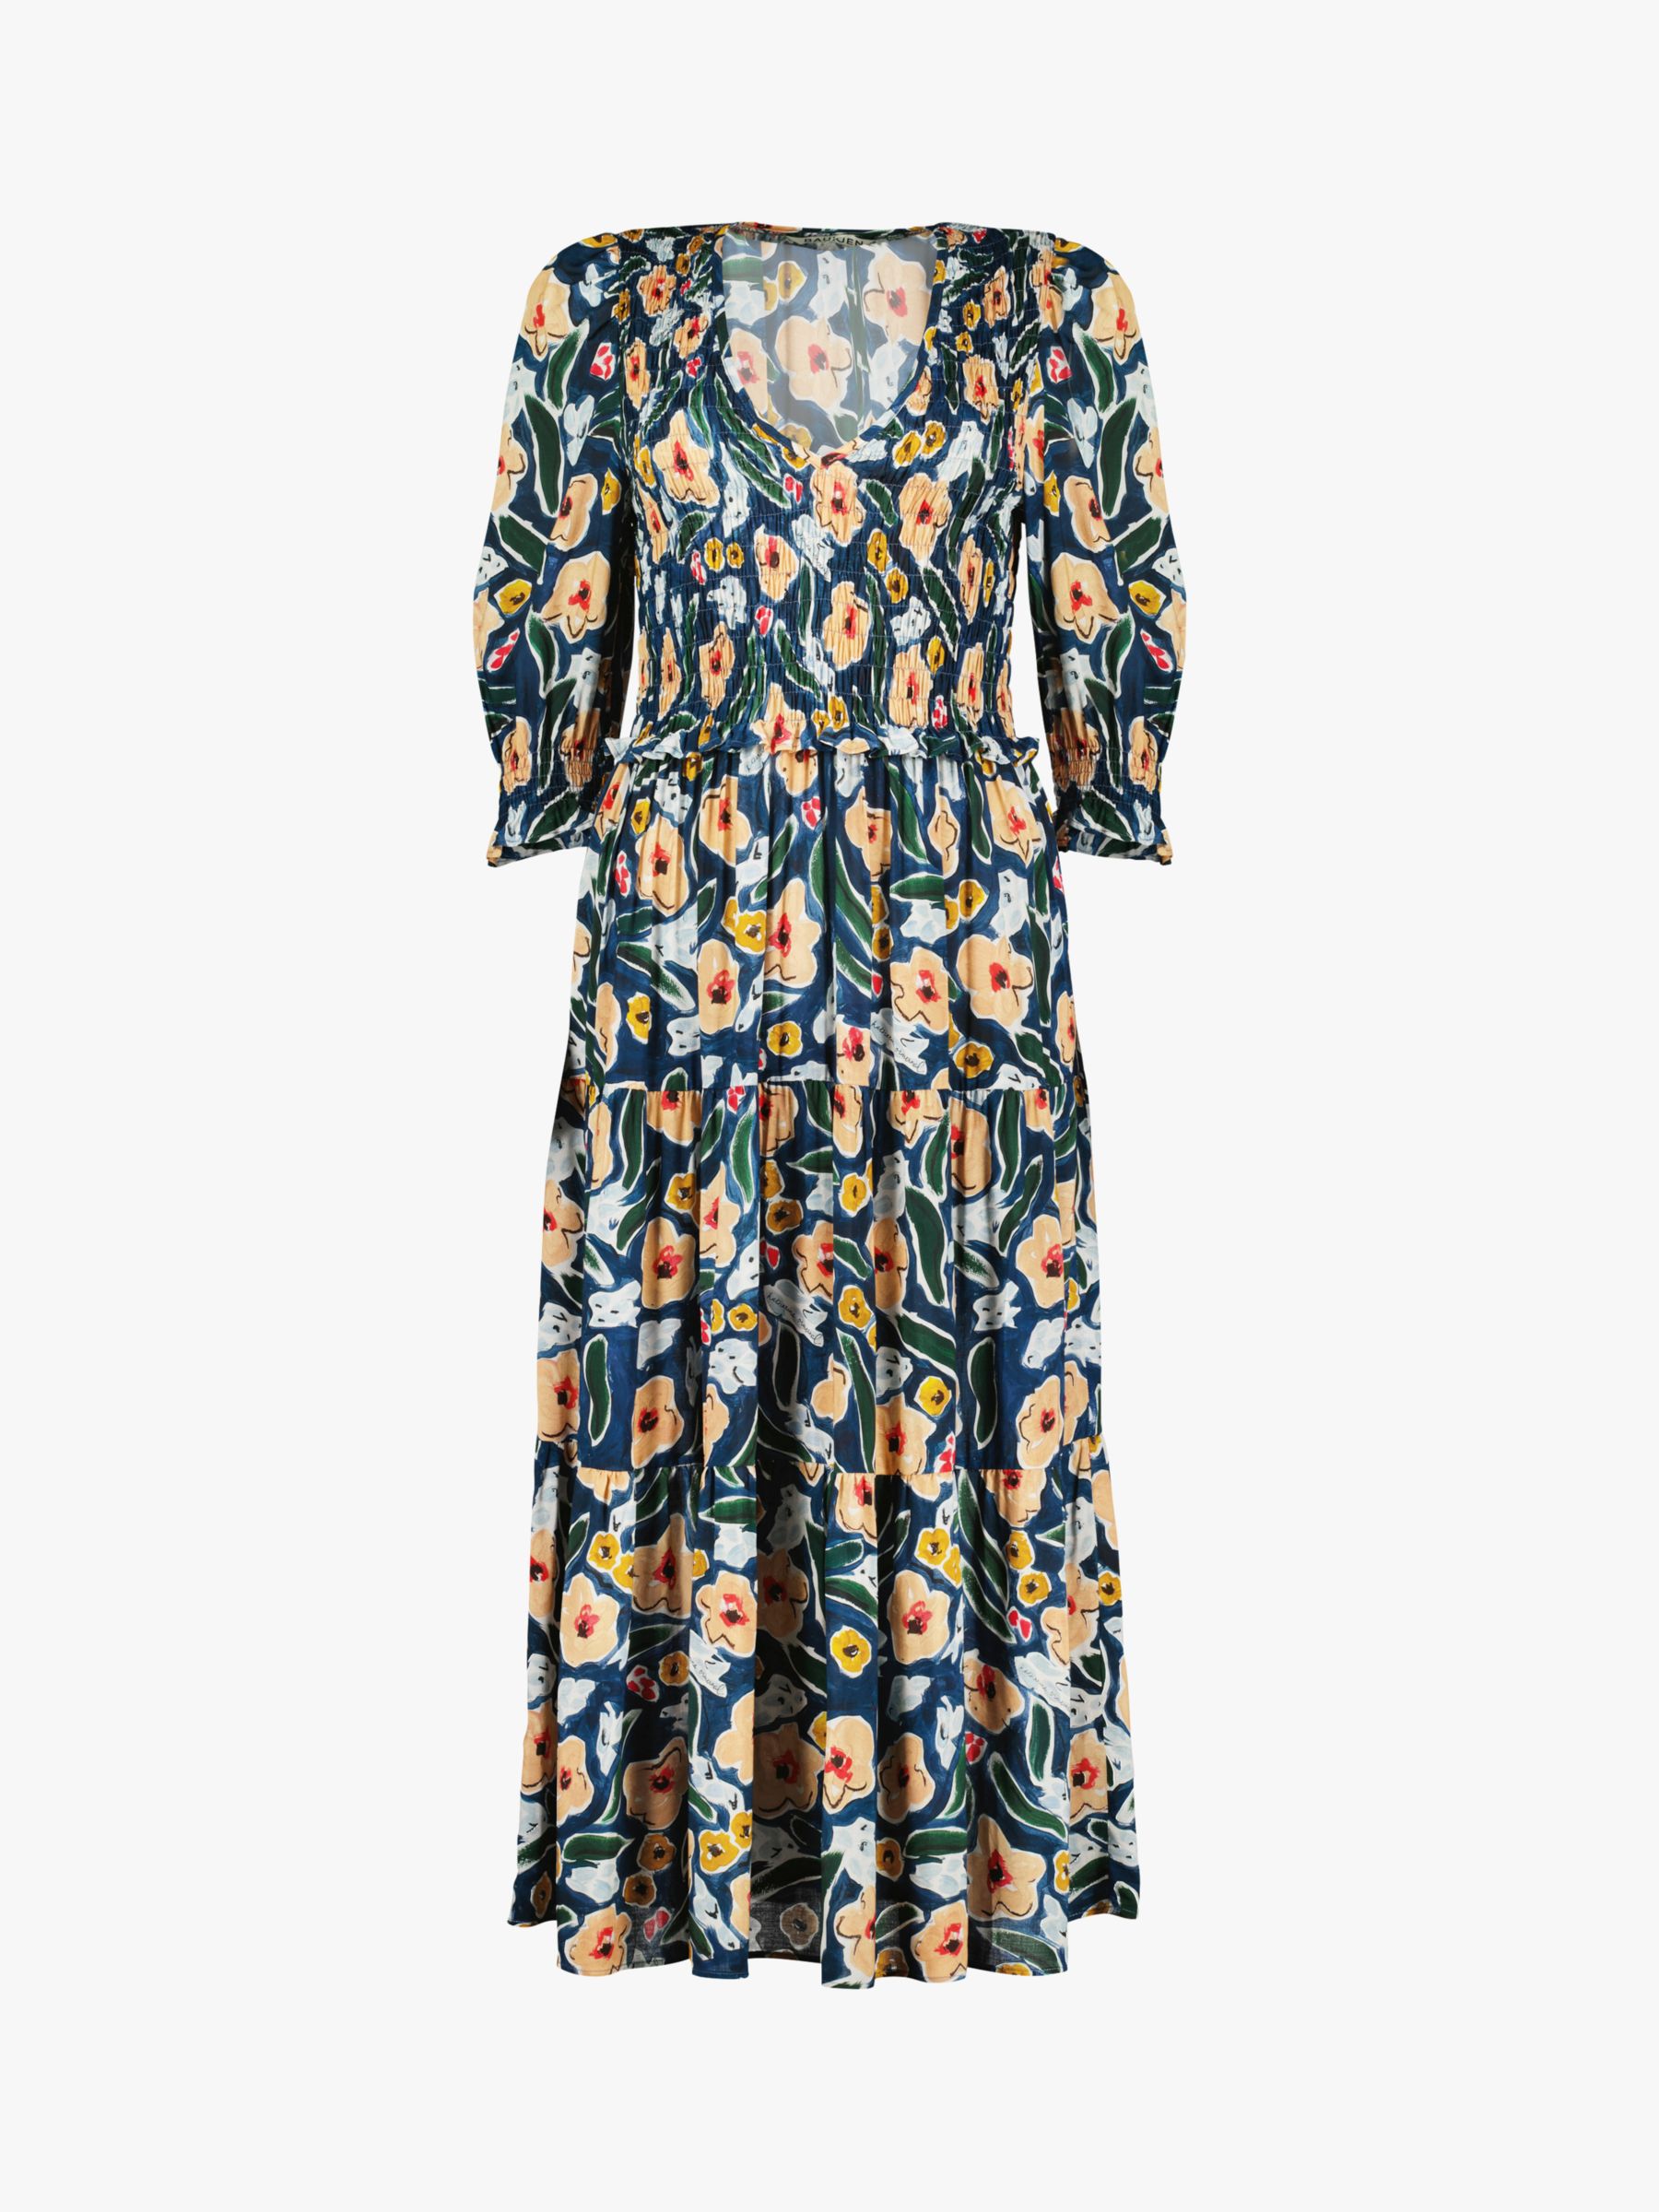 Baukjen x Katherine Ormerod Florence Dress, Indigo Print at John Lewis ...